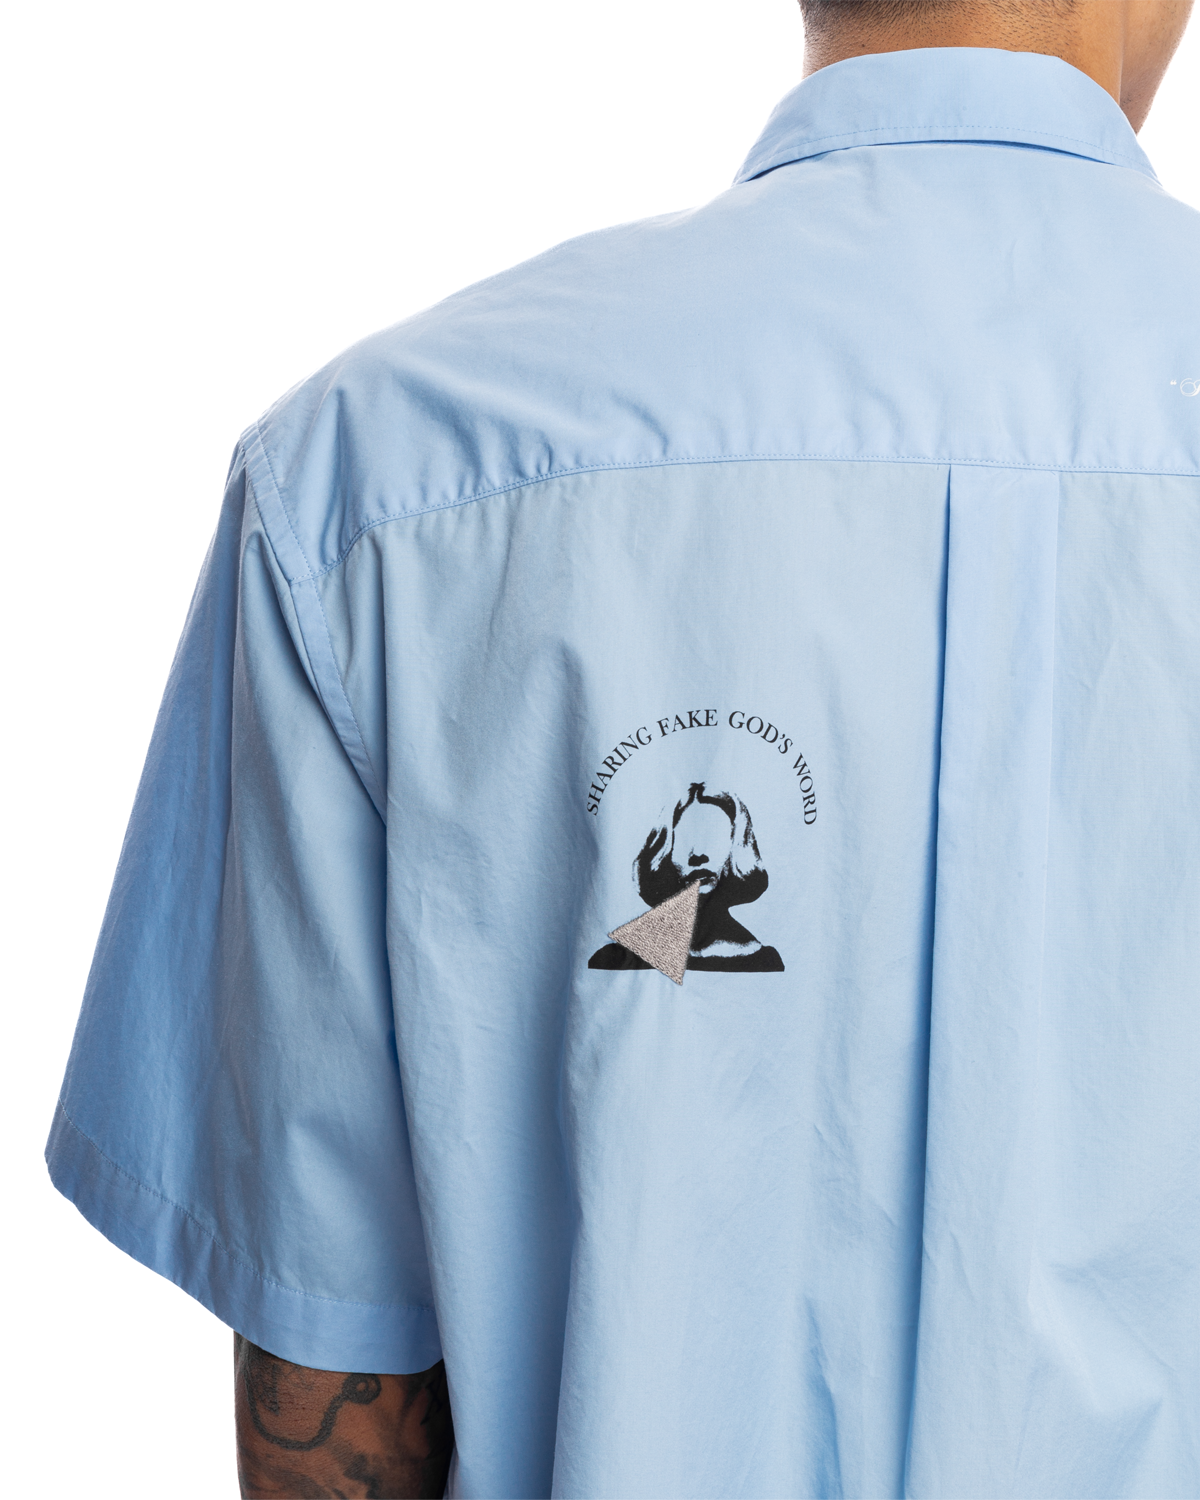 UC1C4406-1 Cotton Embroidered Shirt Light Blue